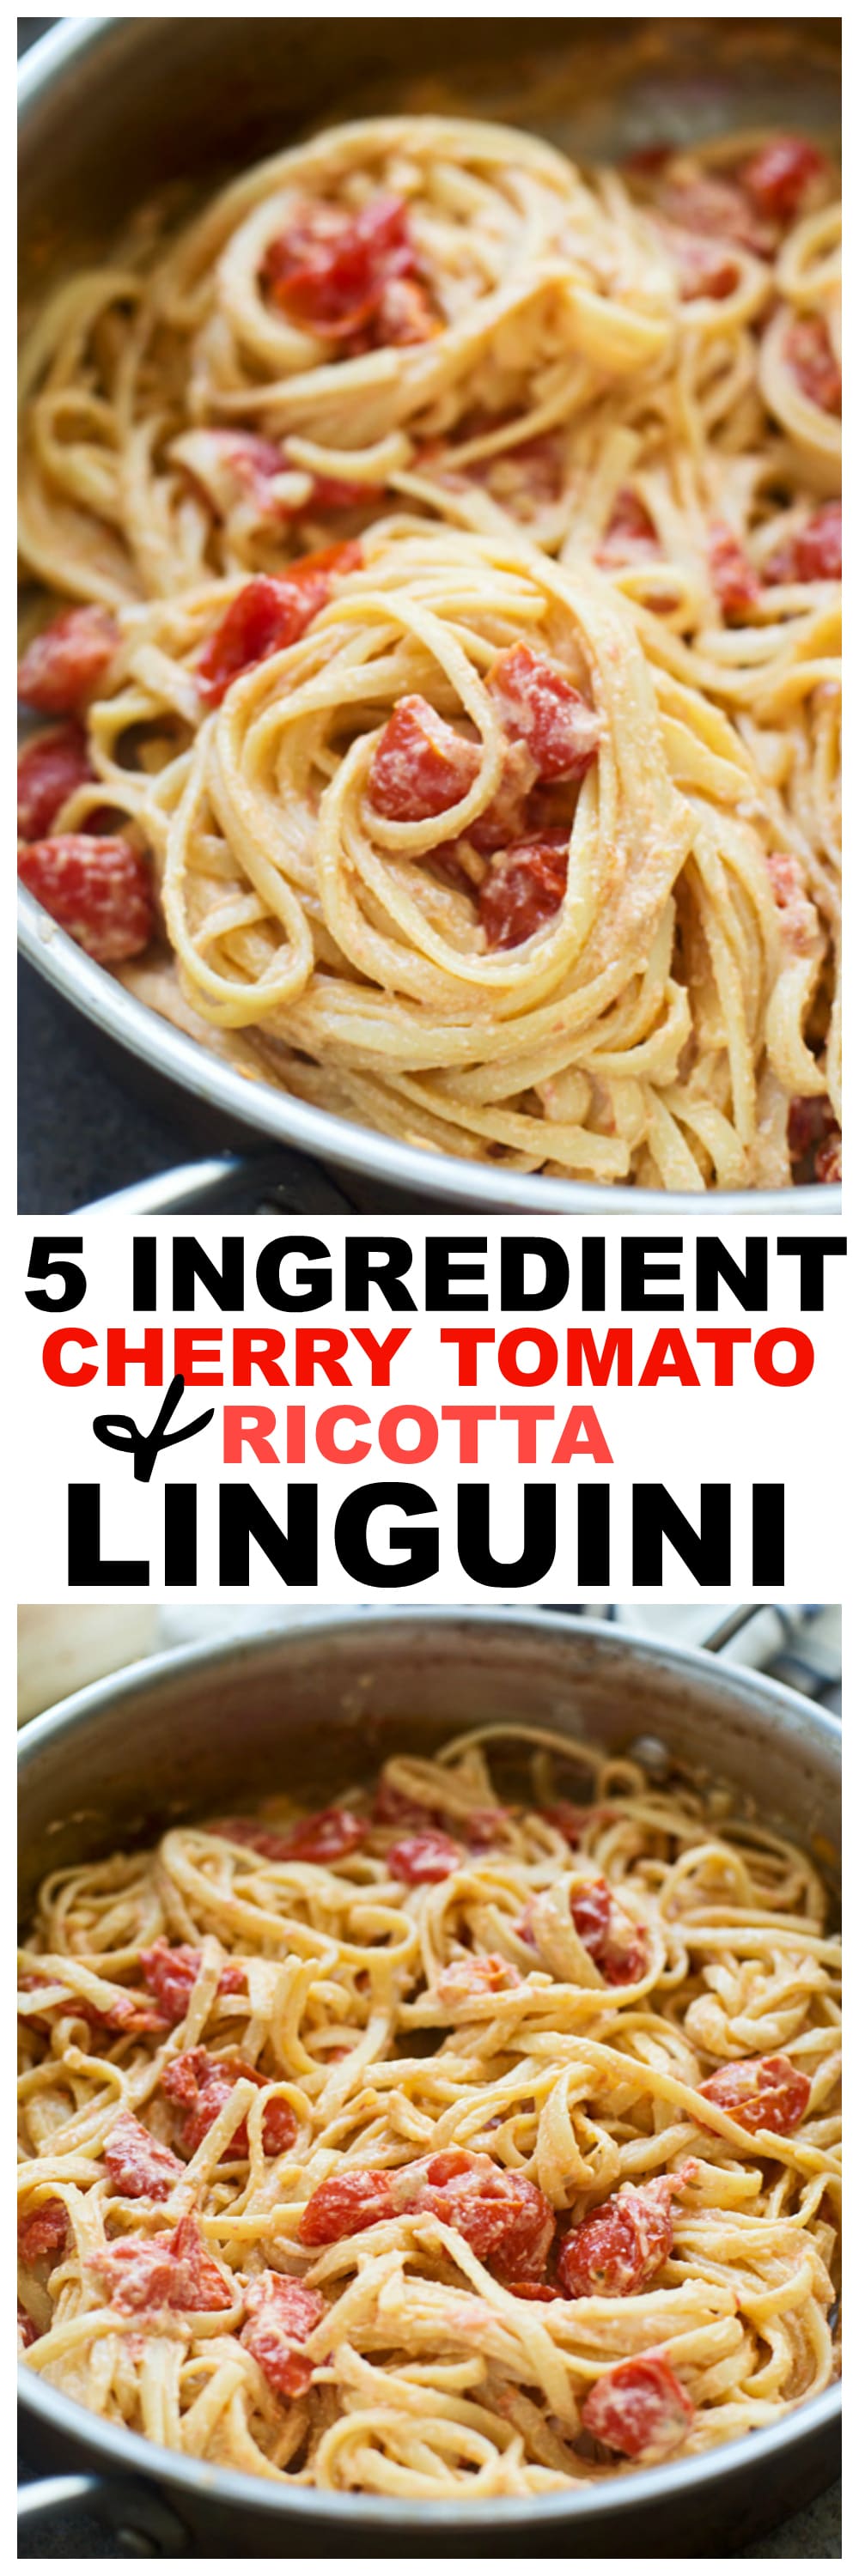 5 Ingredient Cherry Tomato & Ricotta Linguini - Less than 30 minutes to throw together!